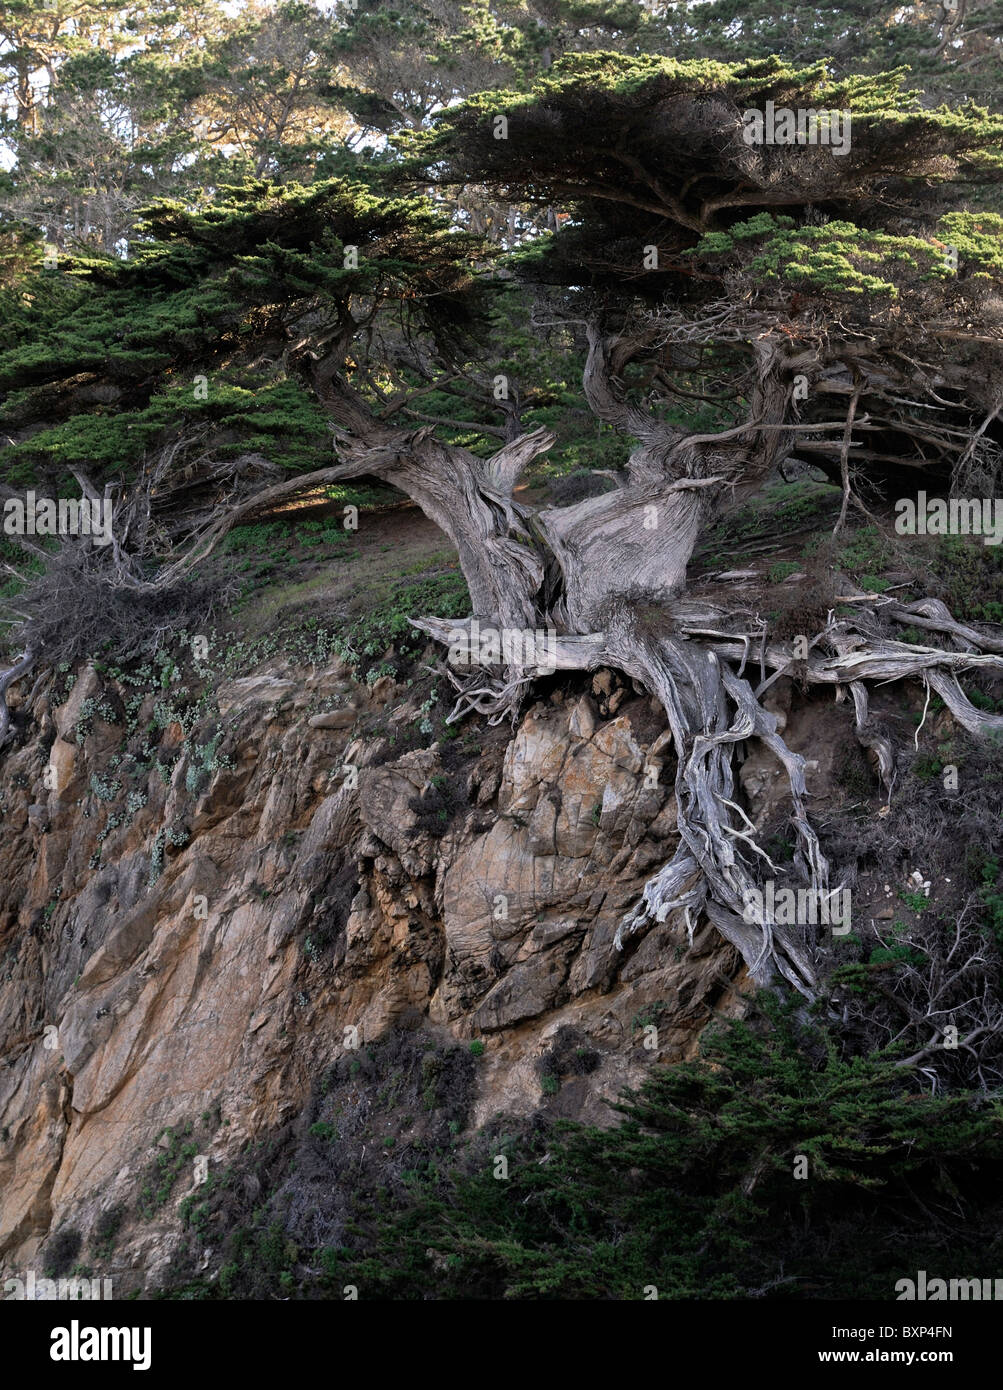 The old veteran cypress tree Point Lobos coast coastal coastline State Reserve monterey bay rocky scenery California USA Stock Photo